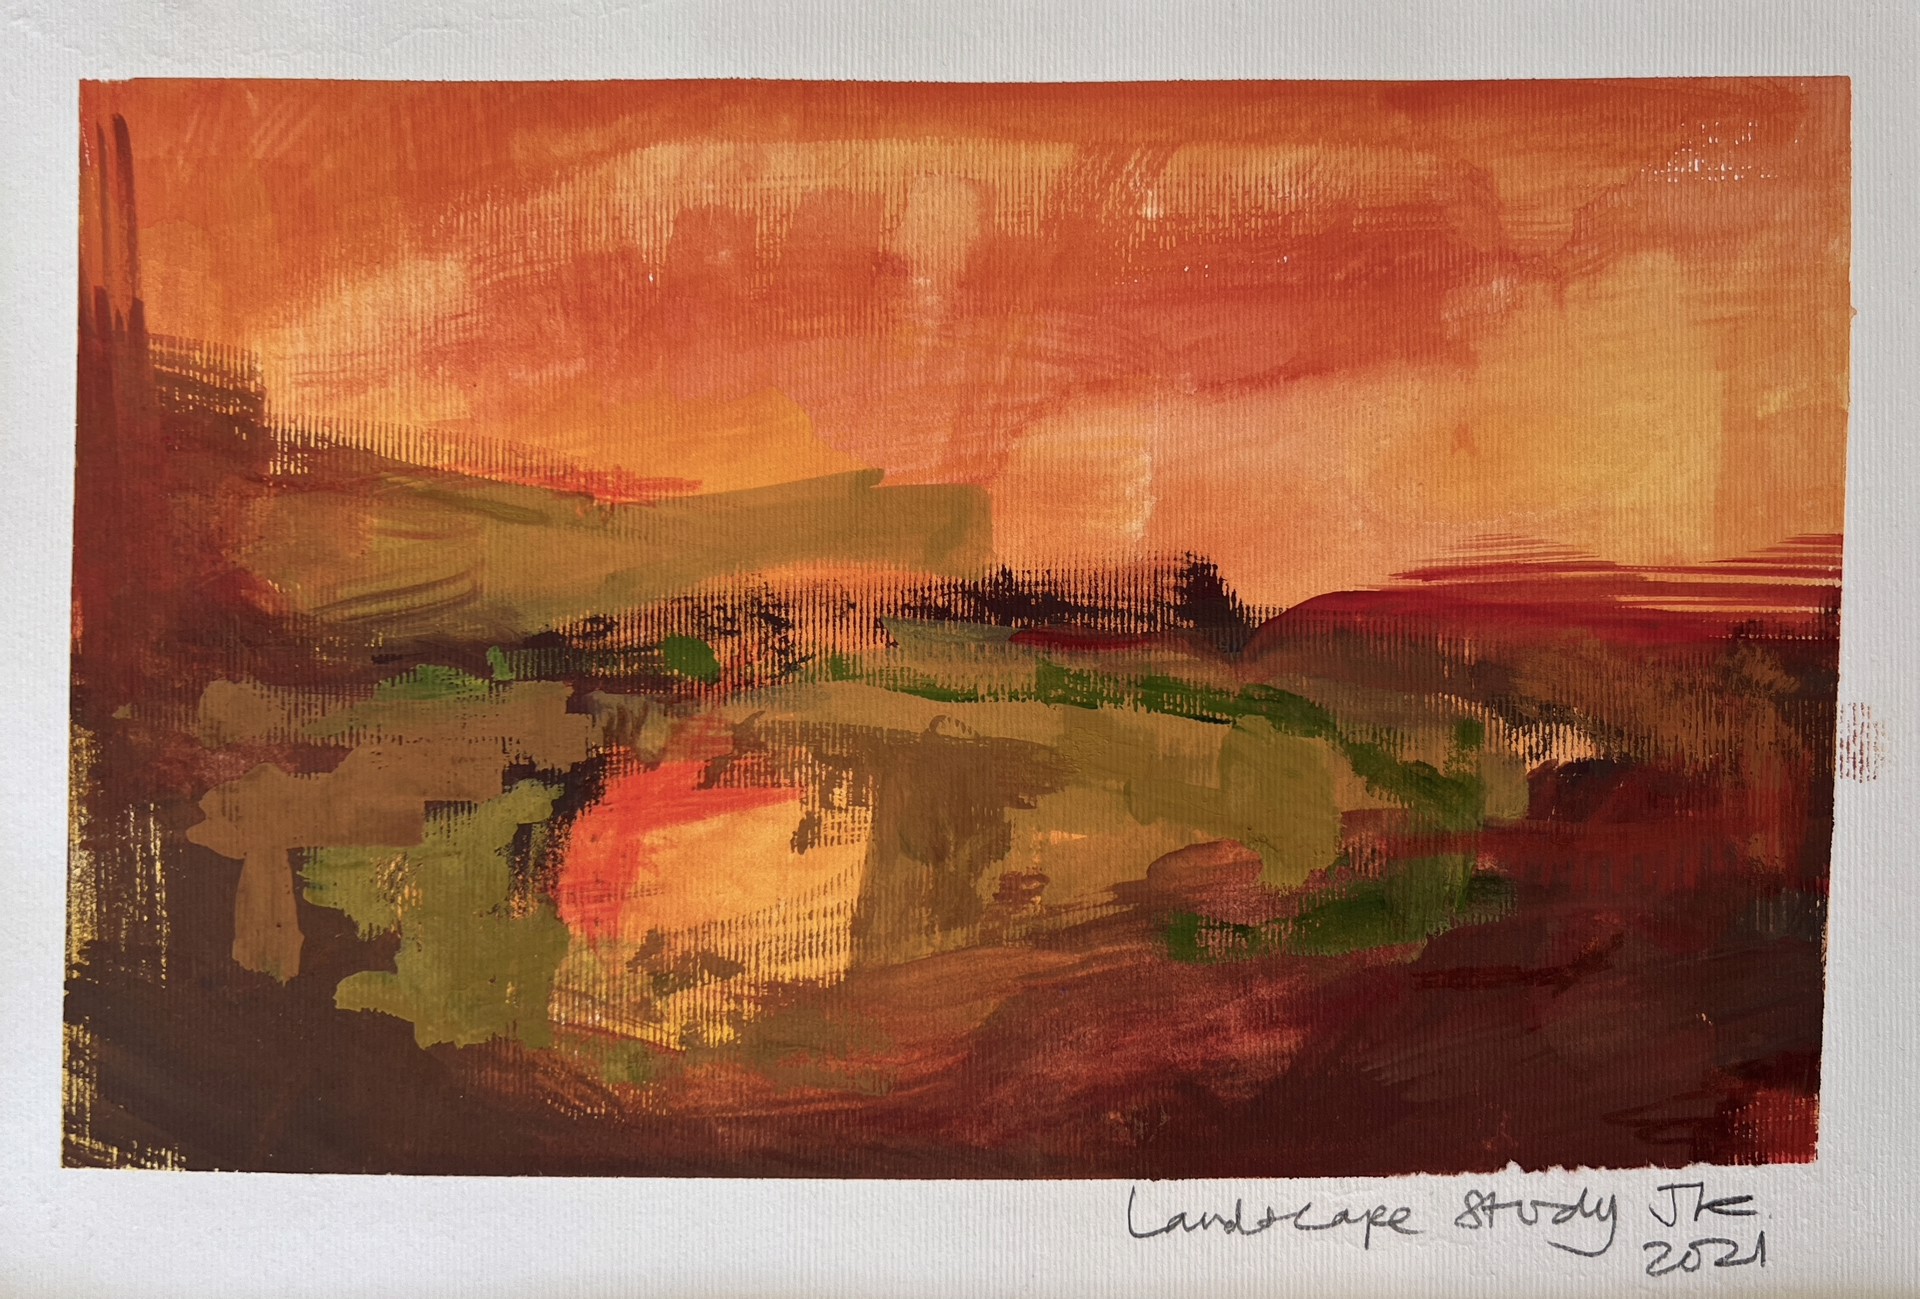 Landscape Study by Jane Kell